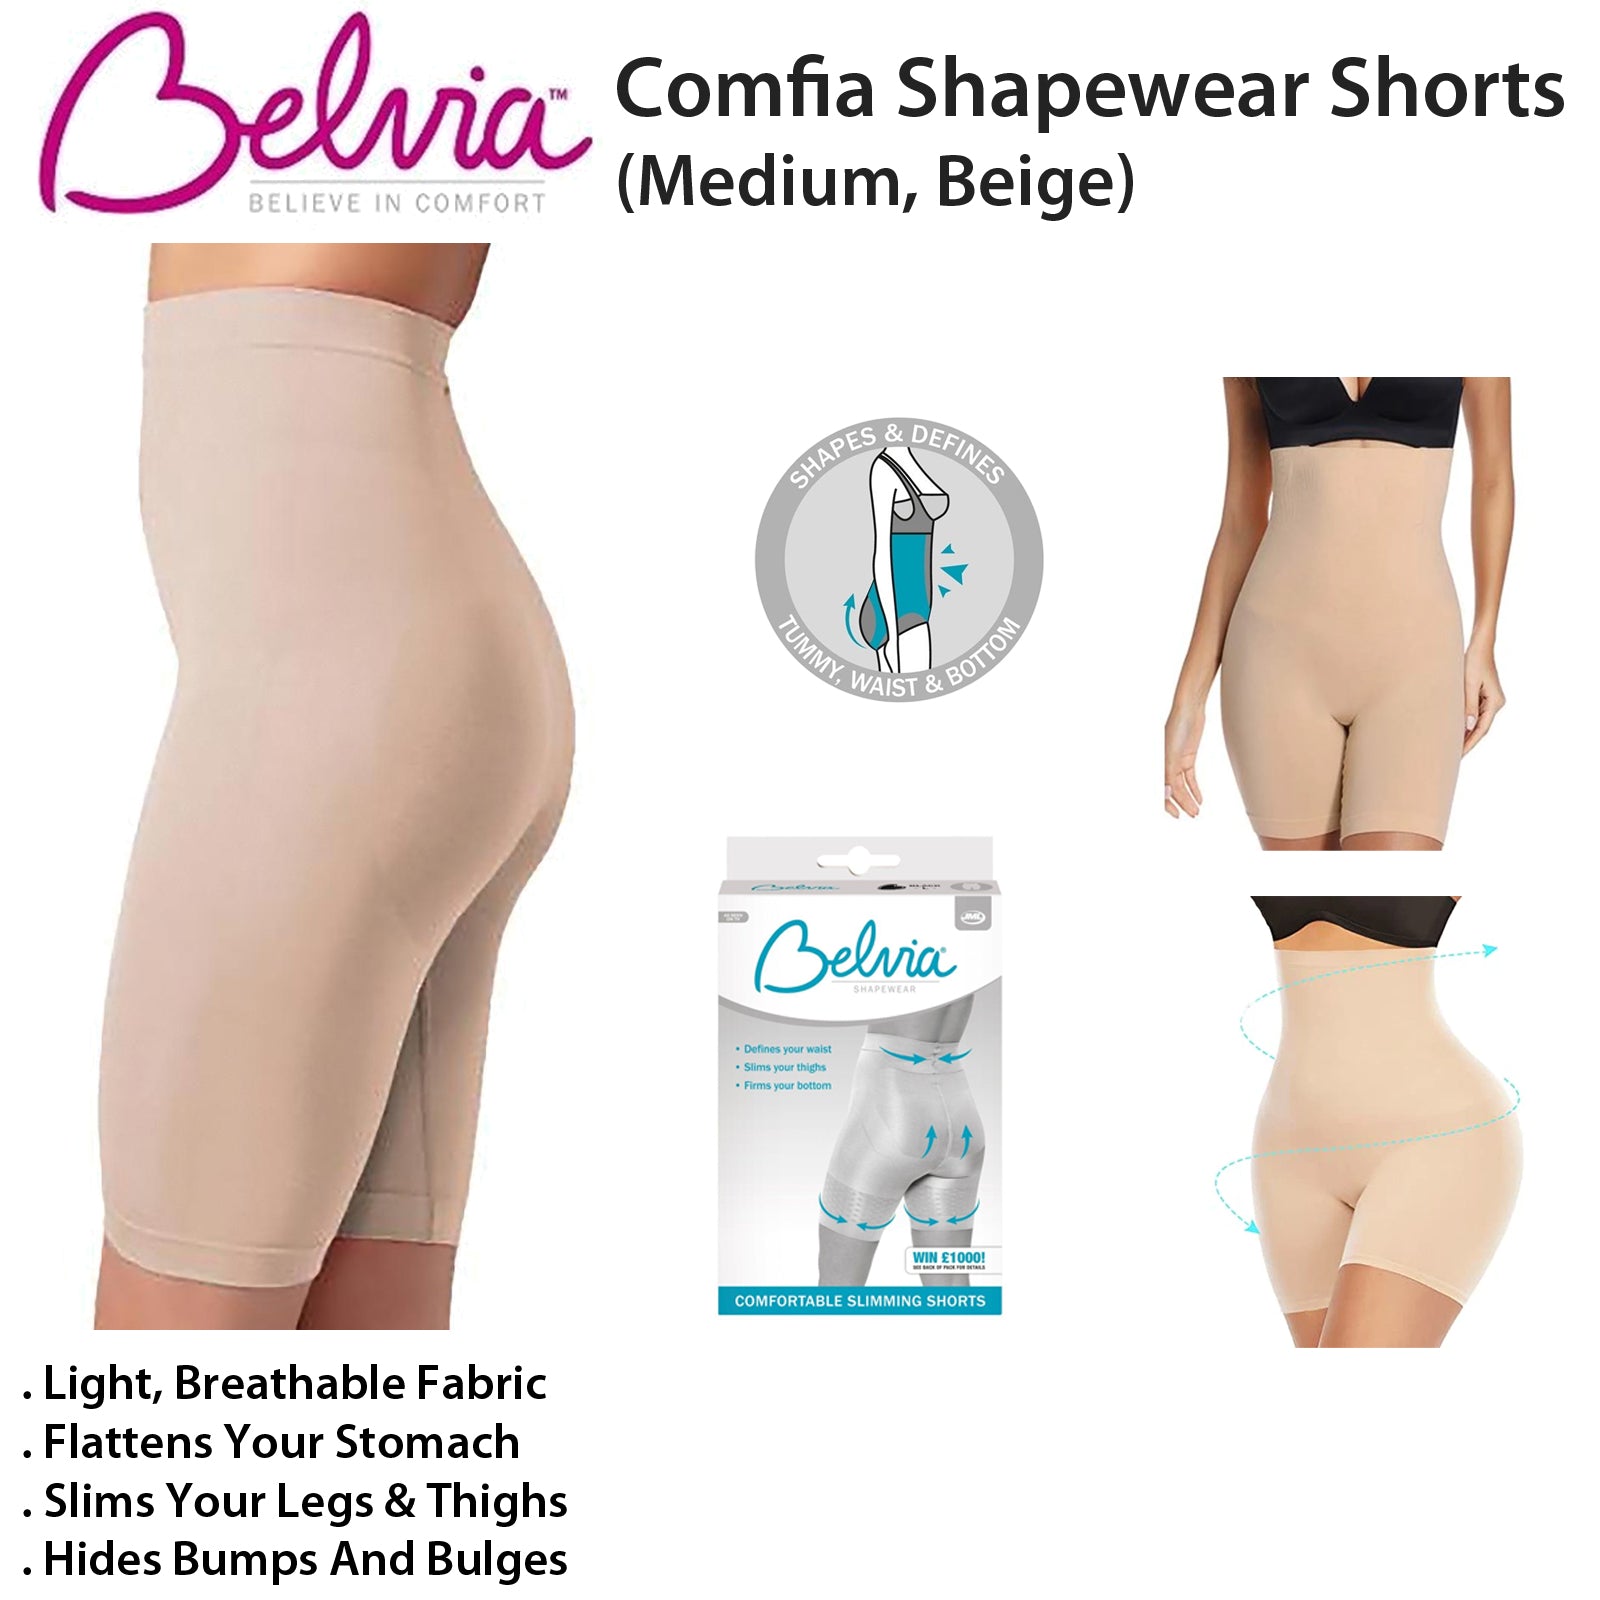 Comfia Shapewear Shorts High Waist Body Shaper (Medium, Beige)